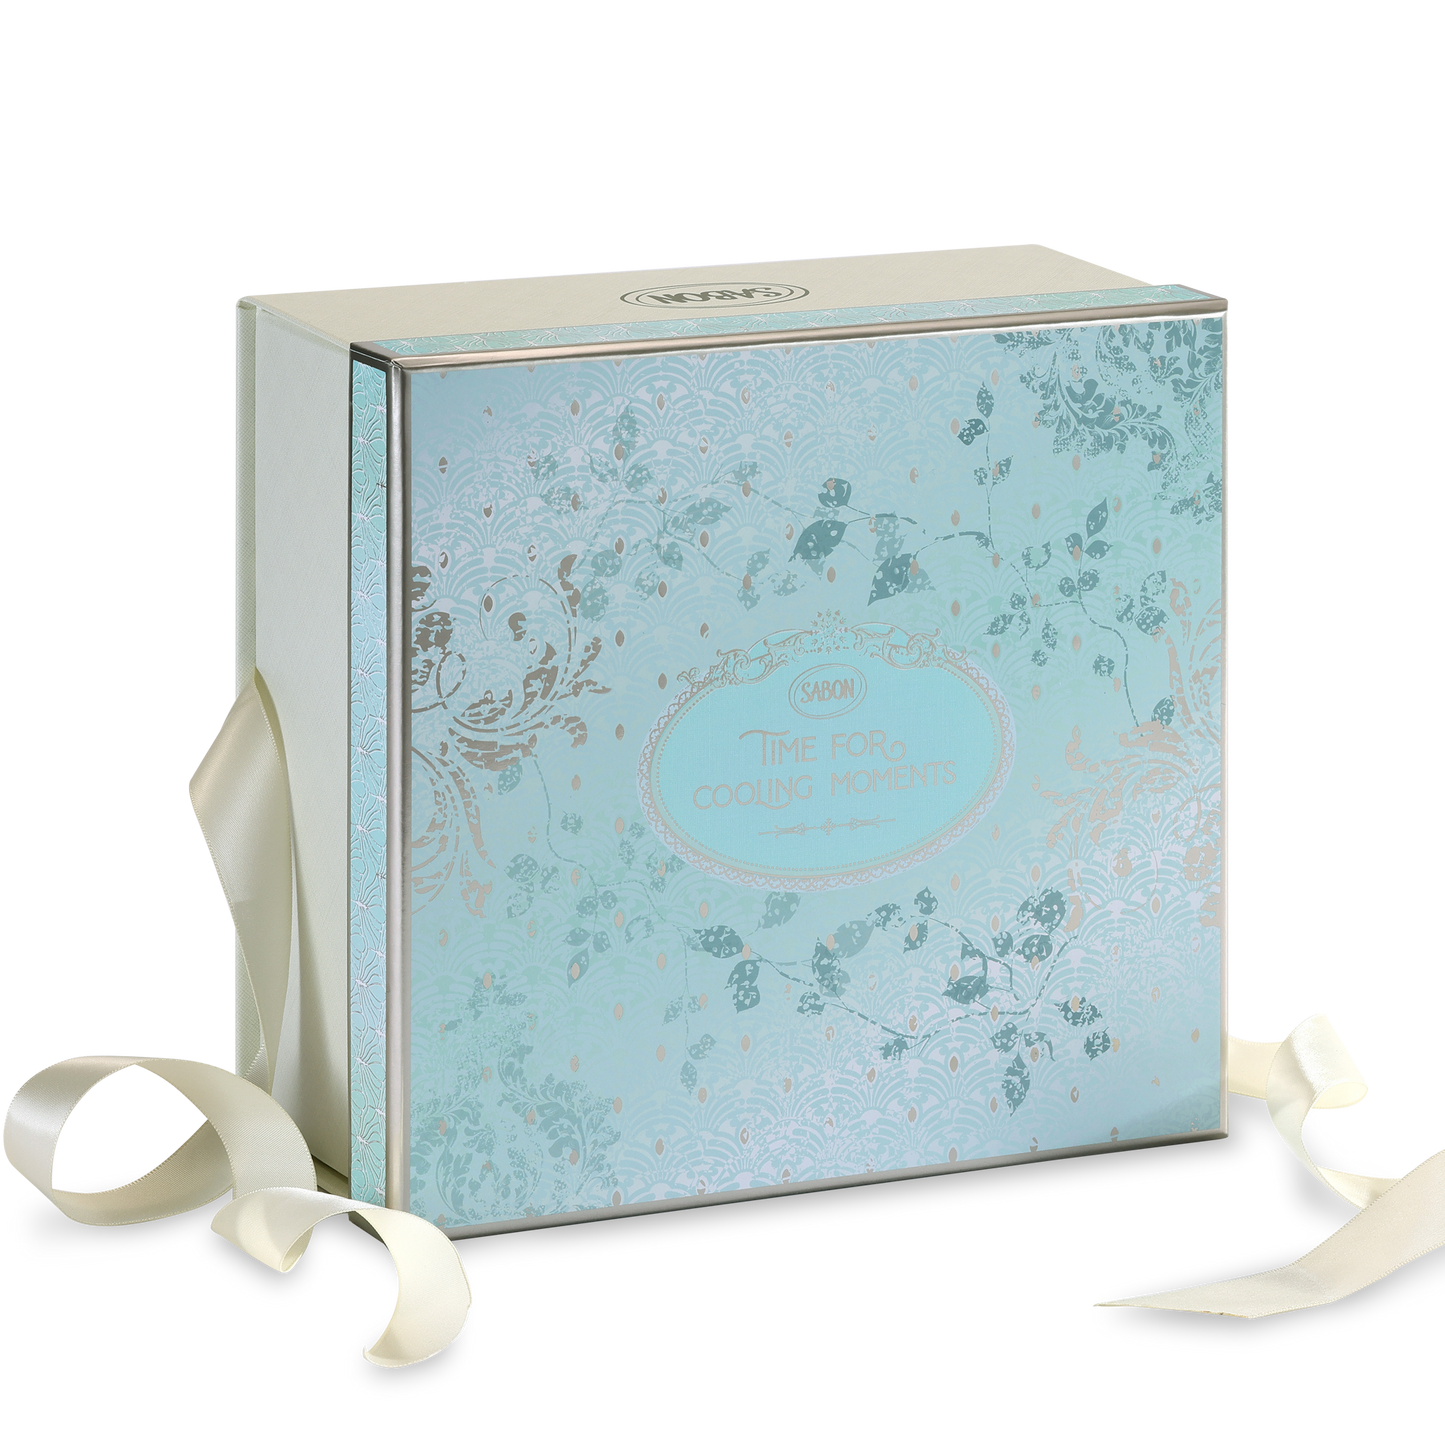 Sabon Minty Spark Green Luxury Gift Box (Base M)